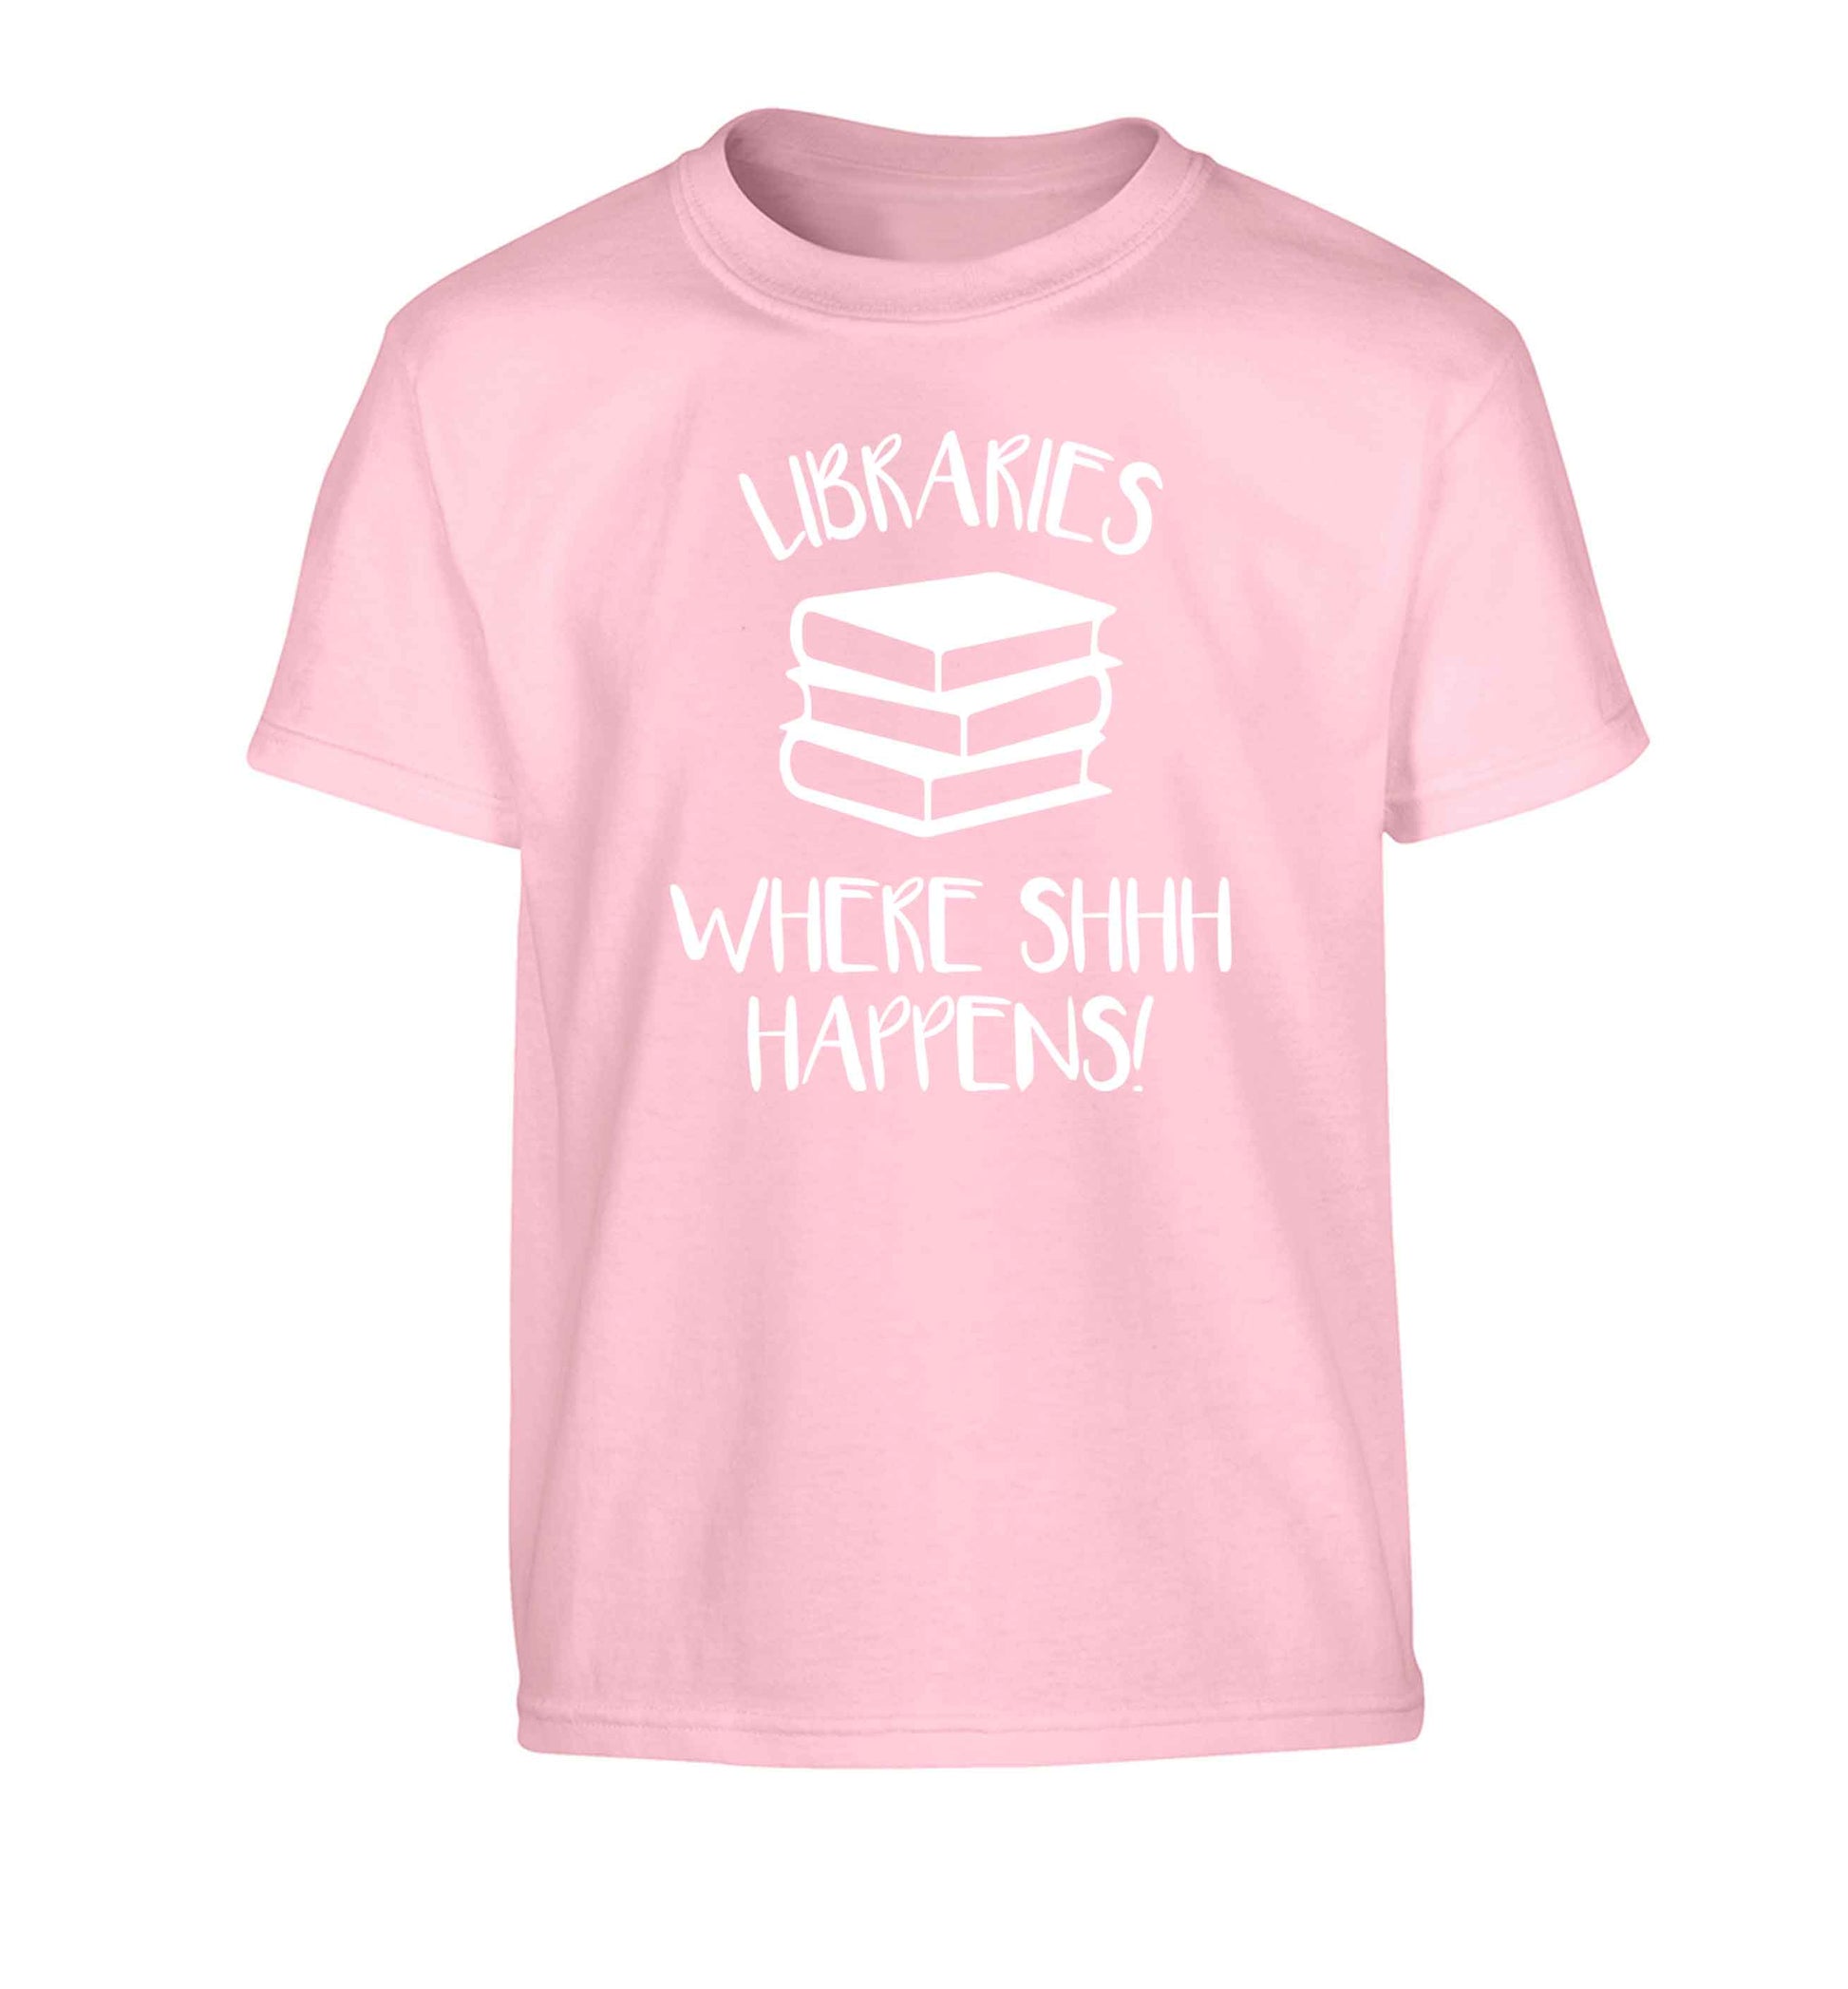 Libraries where shh happens! Children's light pink Tshirt 12-13 Years